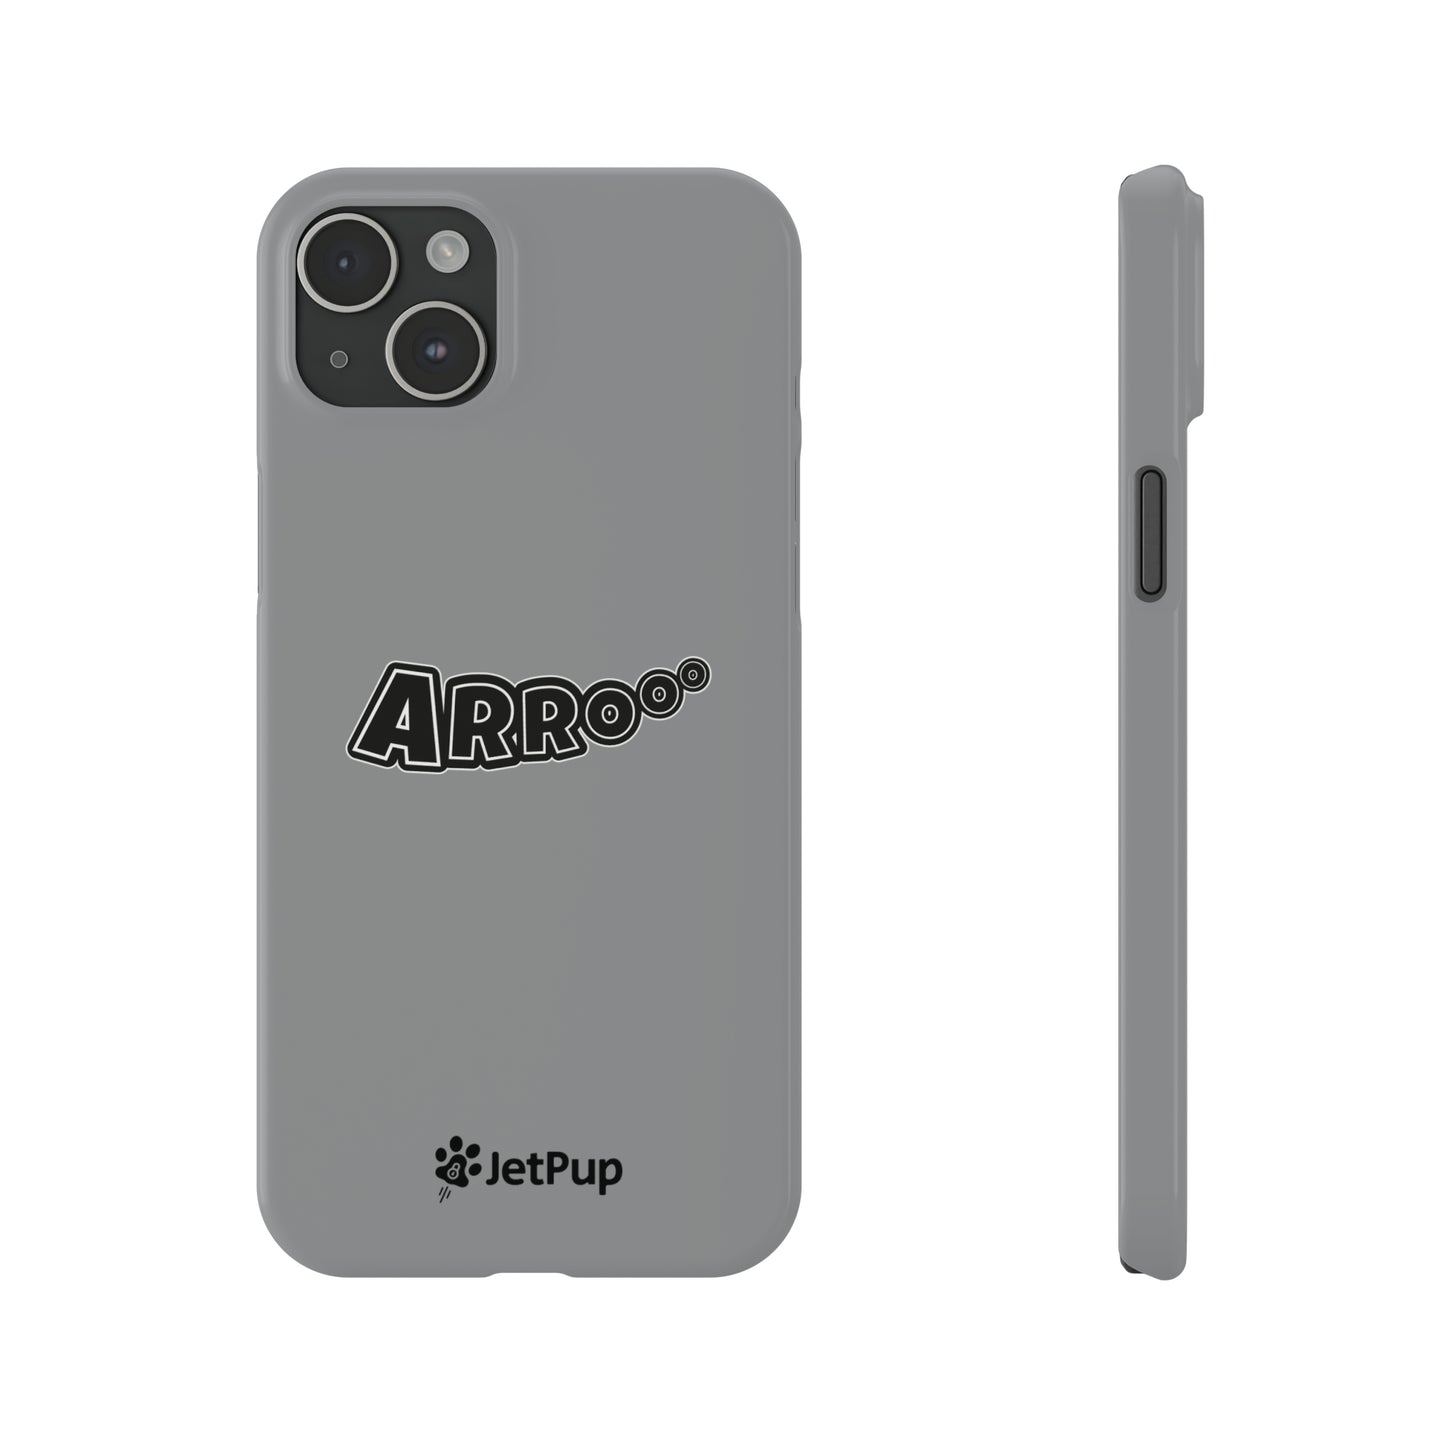 Arrooo Slim iPhone Cases - Grey